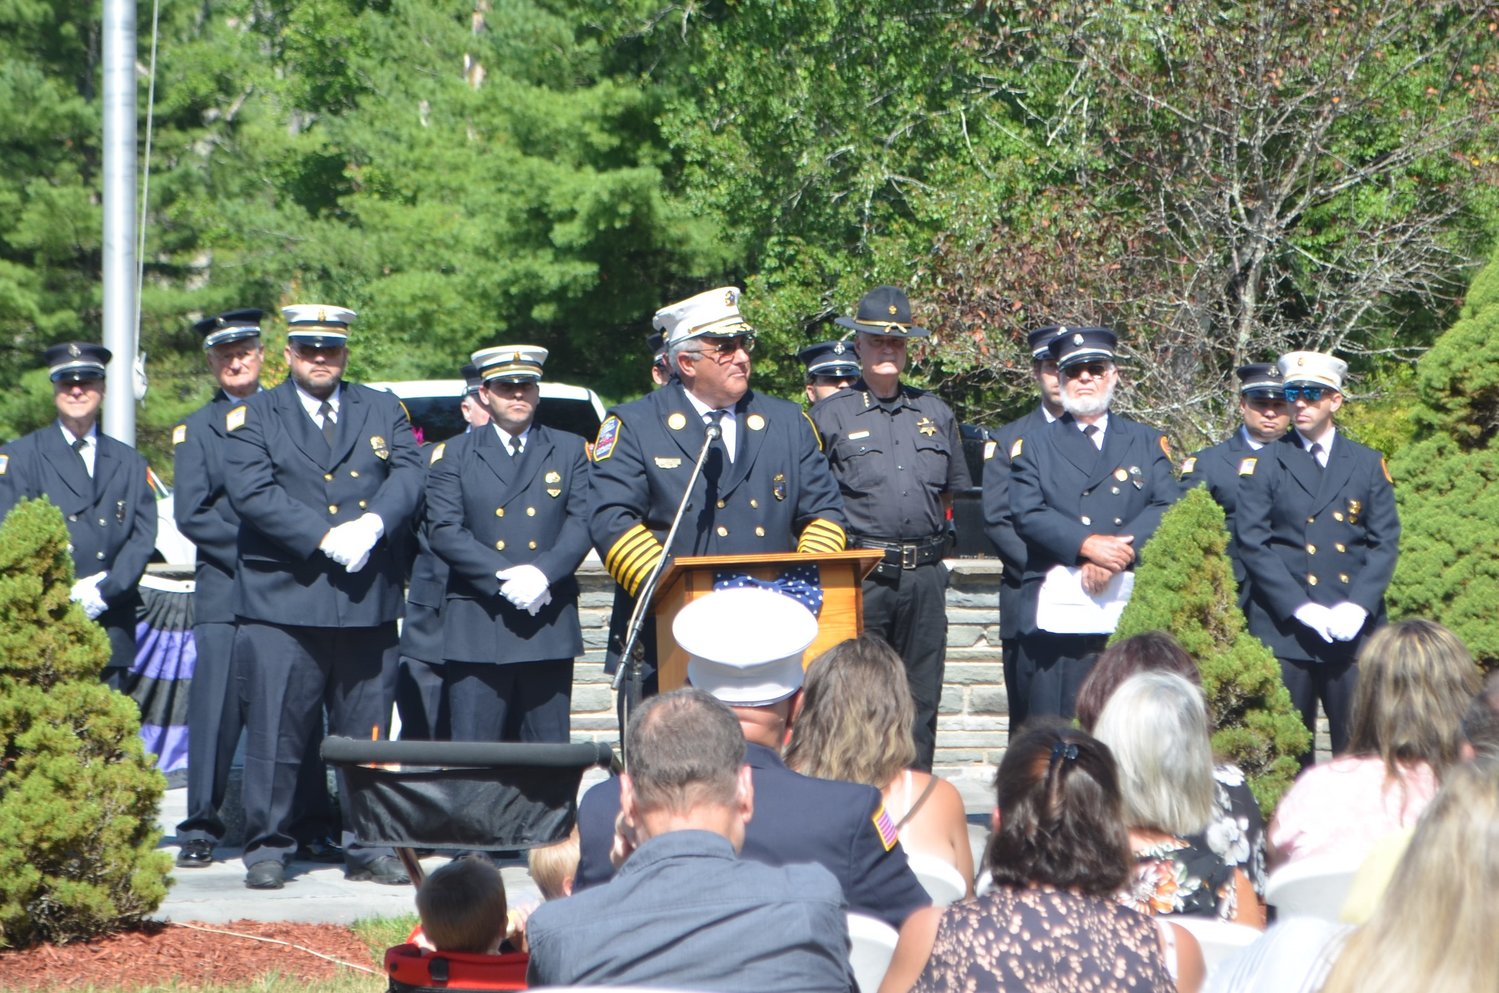 Sullivan County Fire Coordinator John Hauschild speaking at the memorial service for William "Billy" Steinberg.